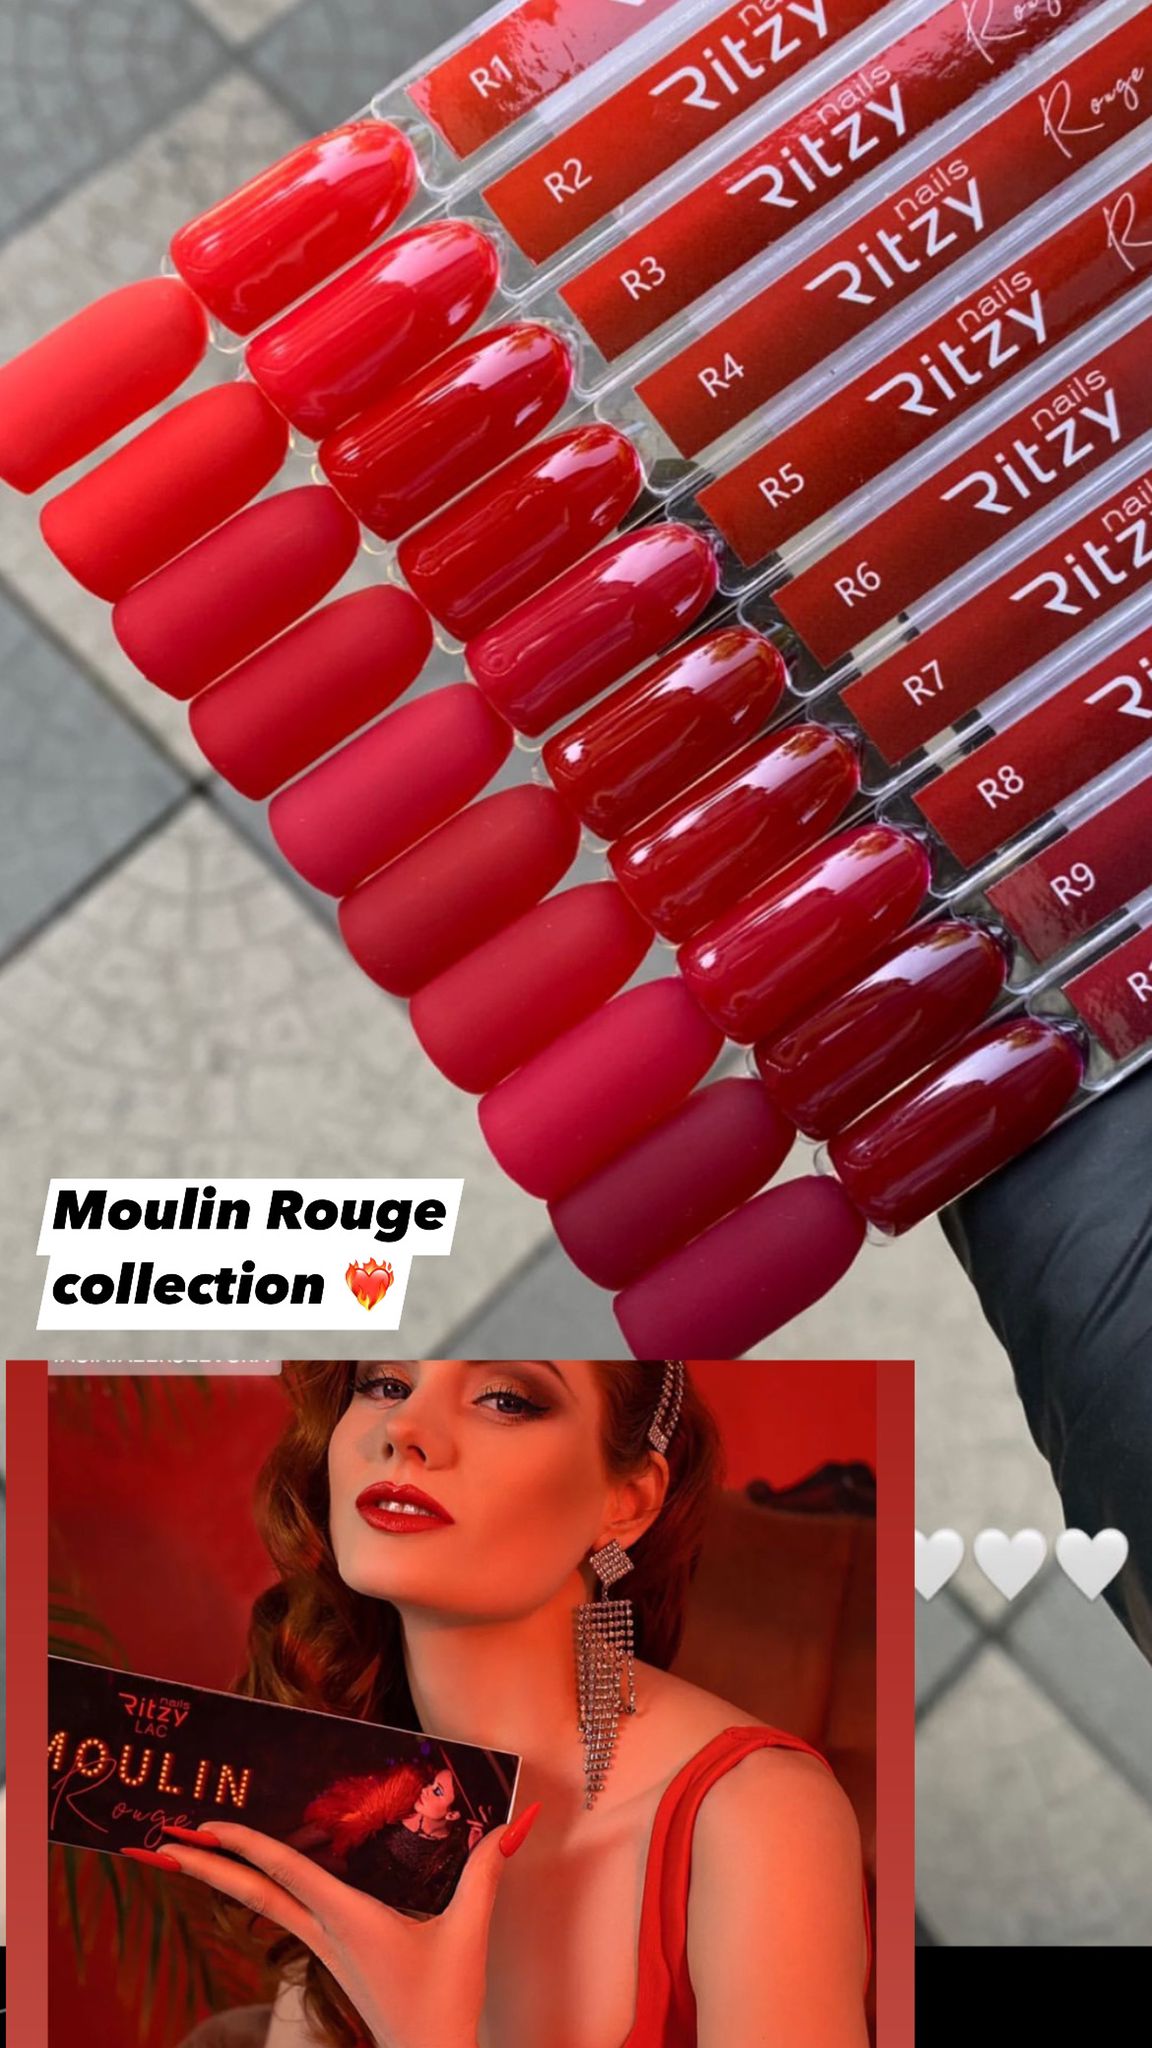 “Moulin Rouge ”colección de 10x 9ml colores.